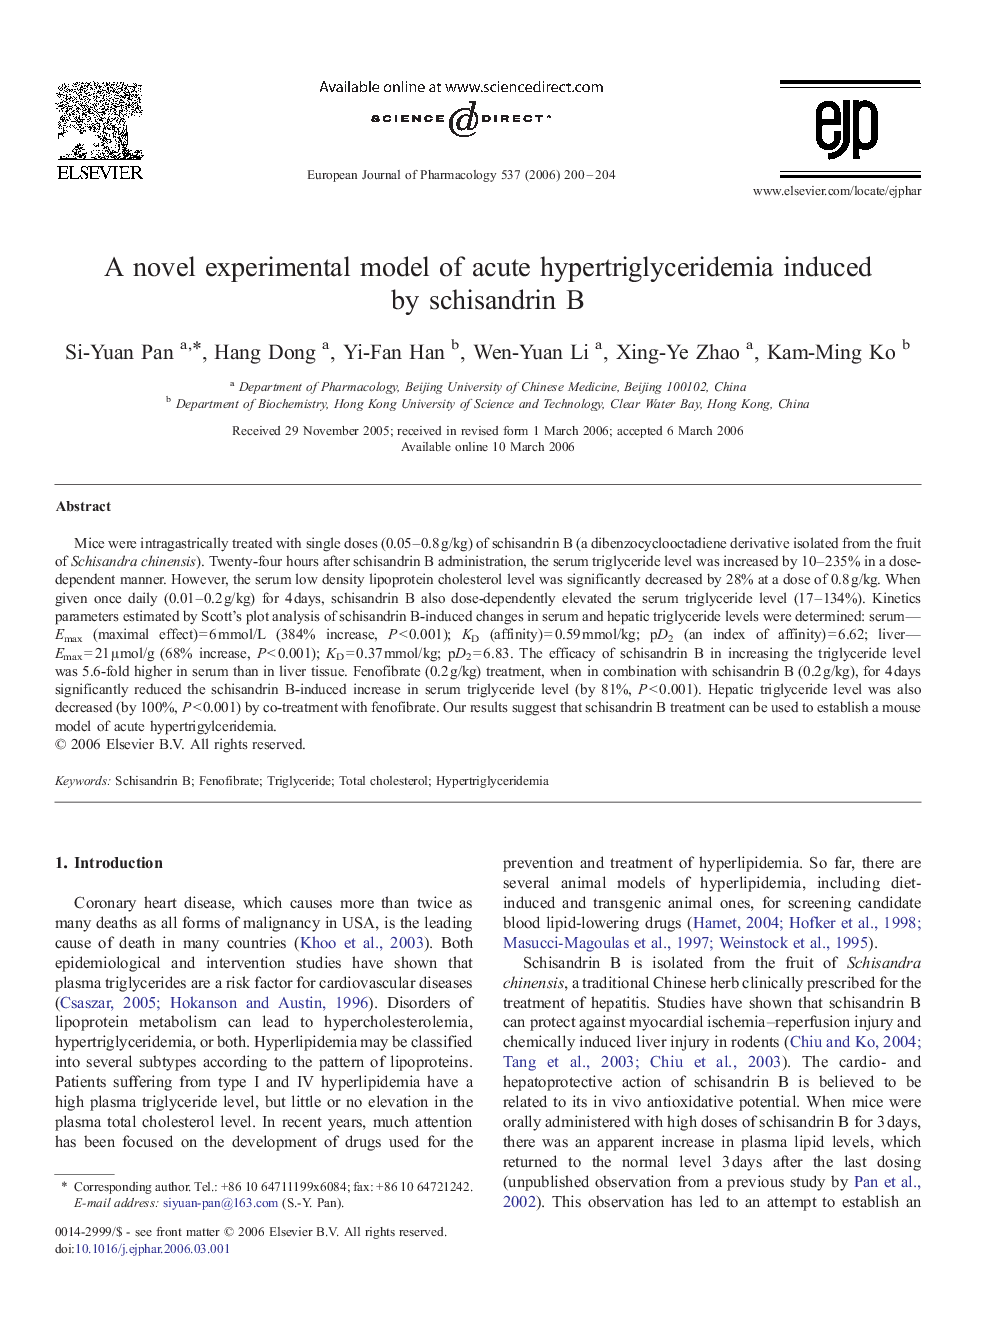 A novel experimental model of acute hypertriglyceridemia induced by schisandrin B